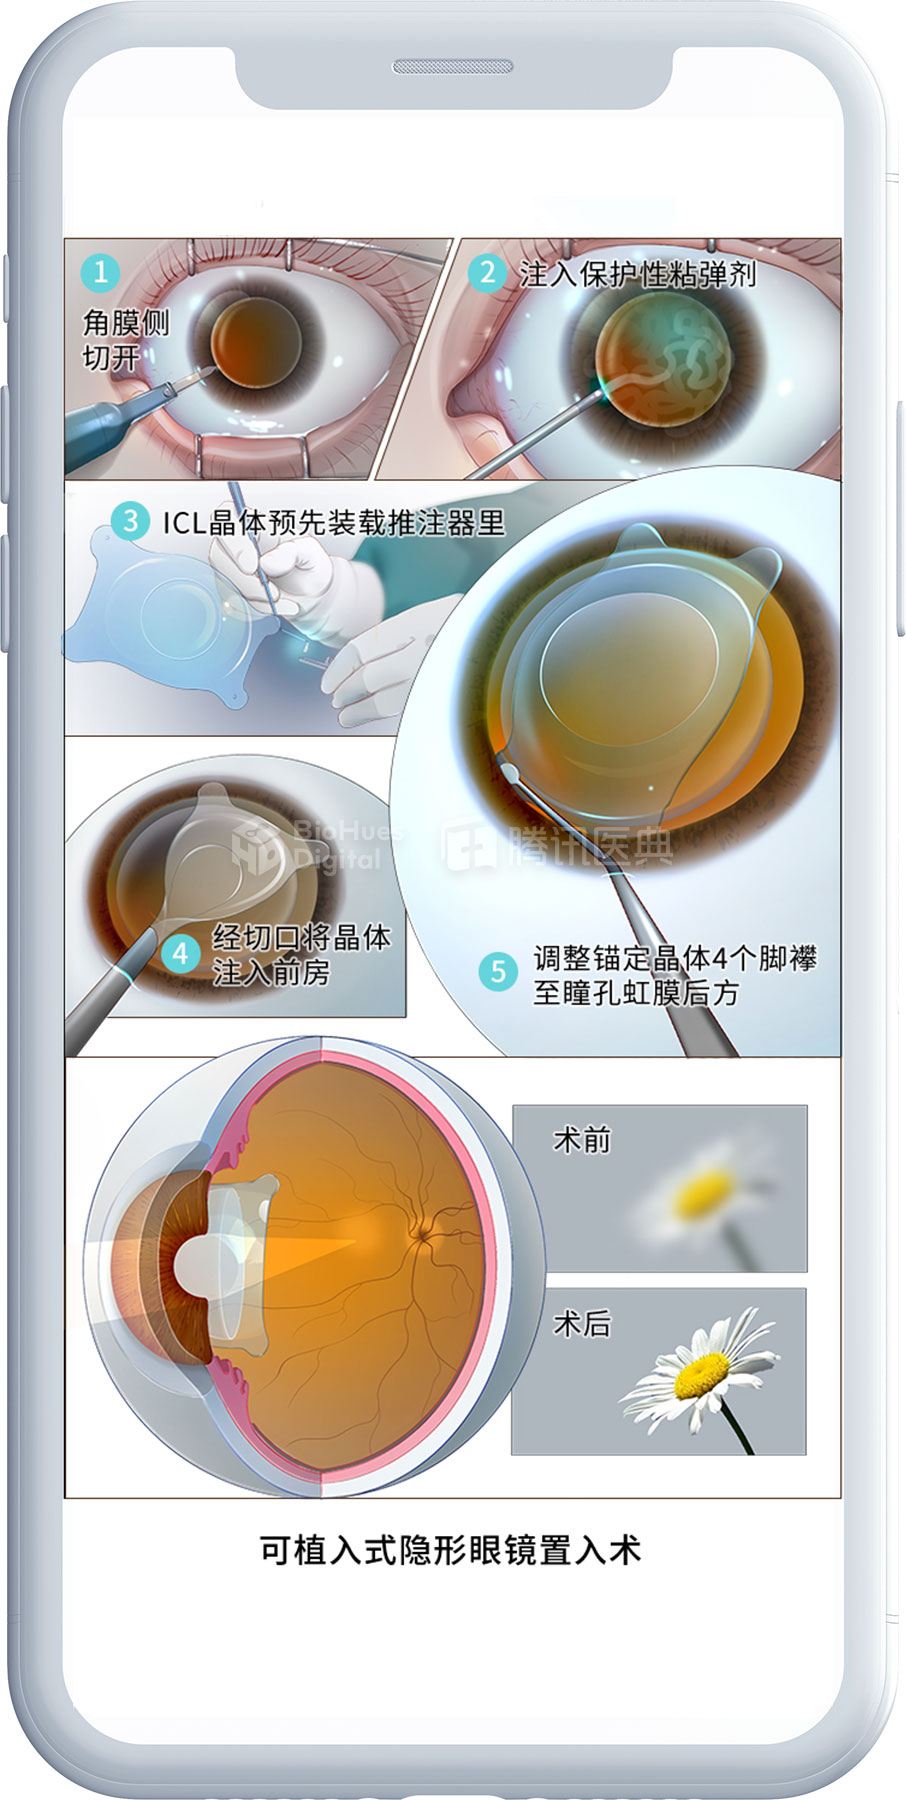 Medical illustration of contact lens implant surgery-biohues digital